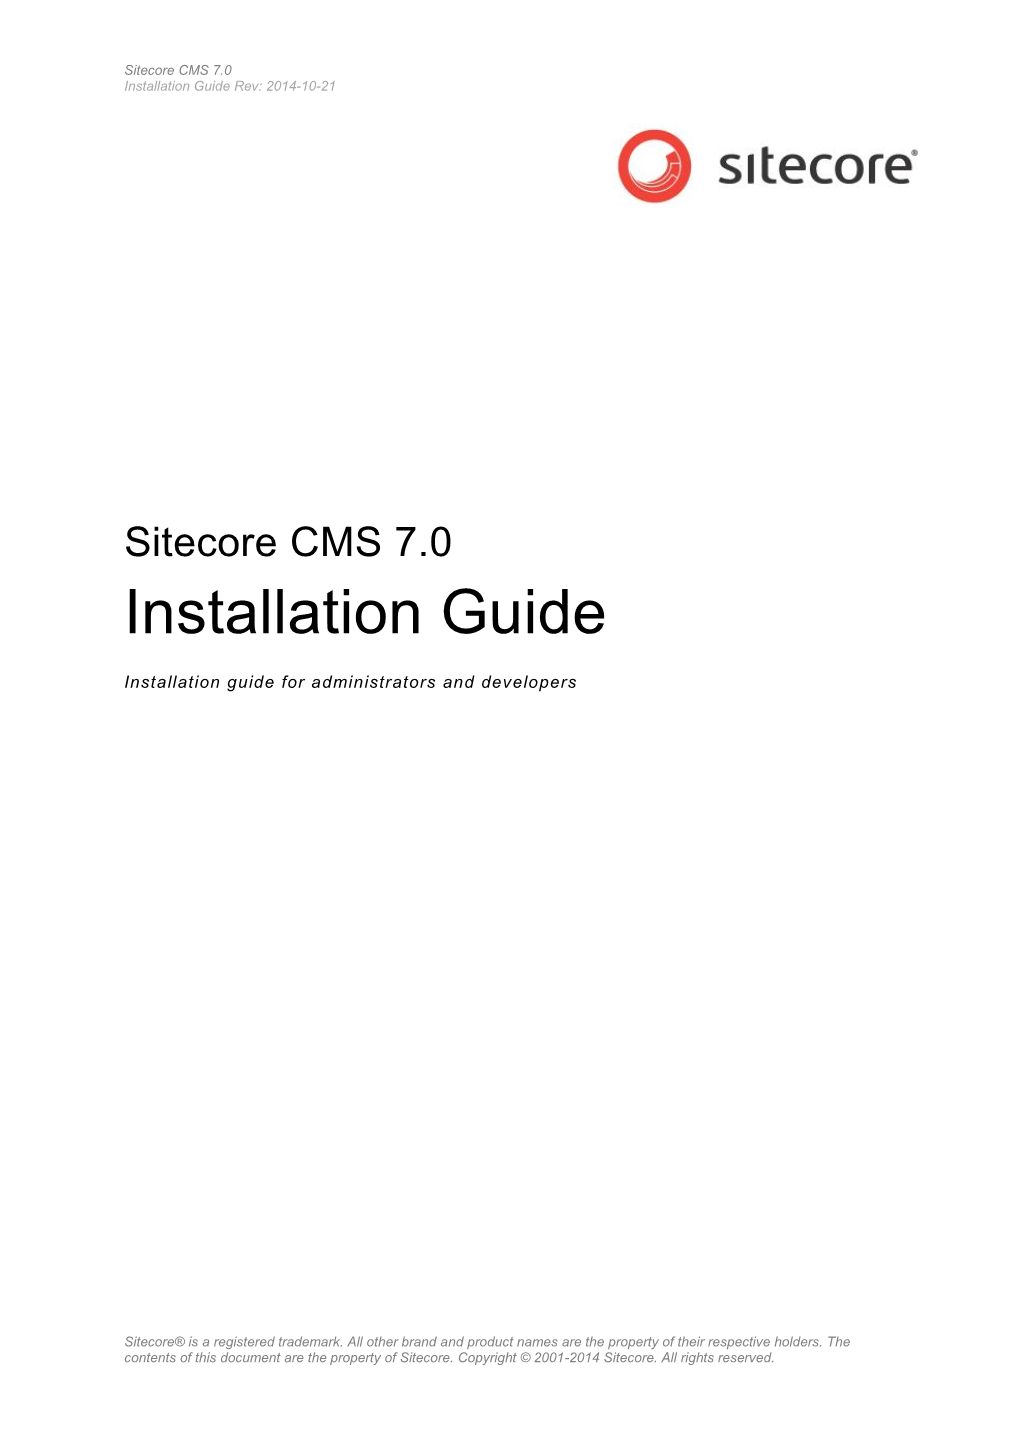 Sitecore CMS 7.0 Installation Guide Rev: 2014-10-21